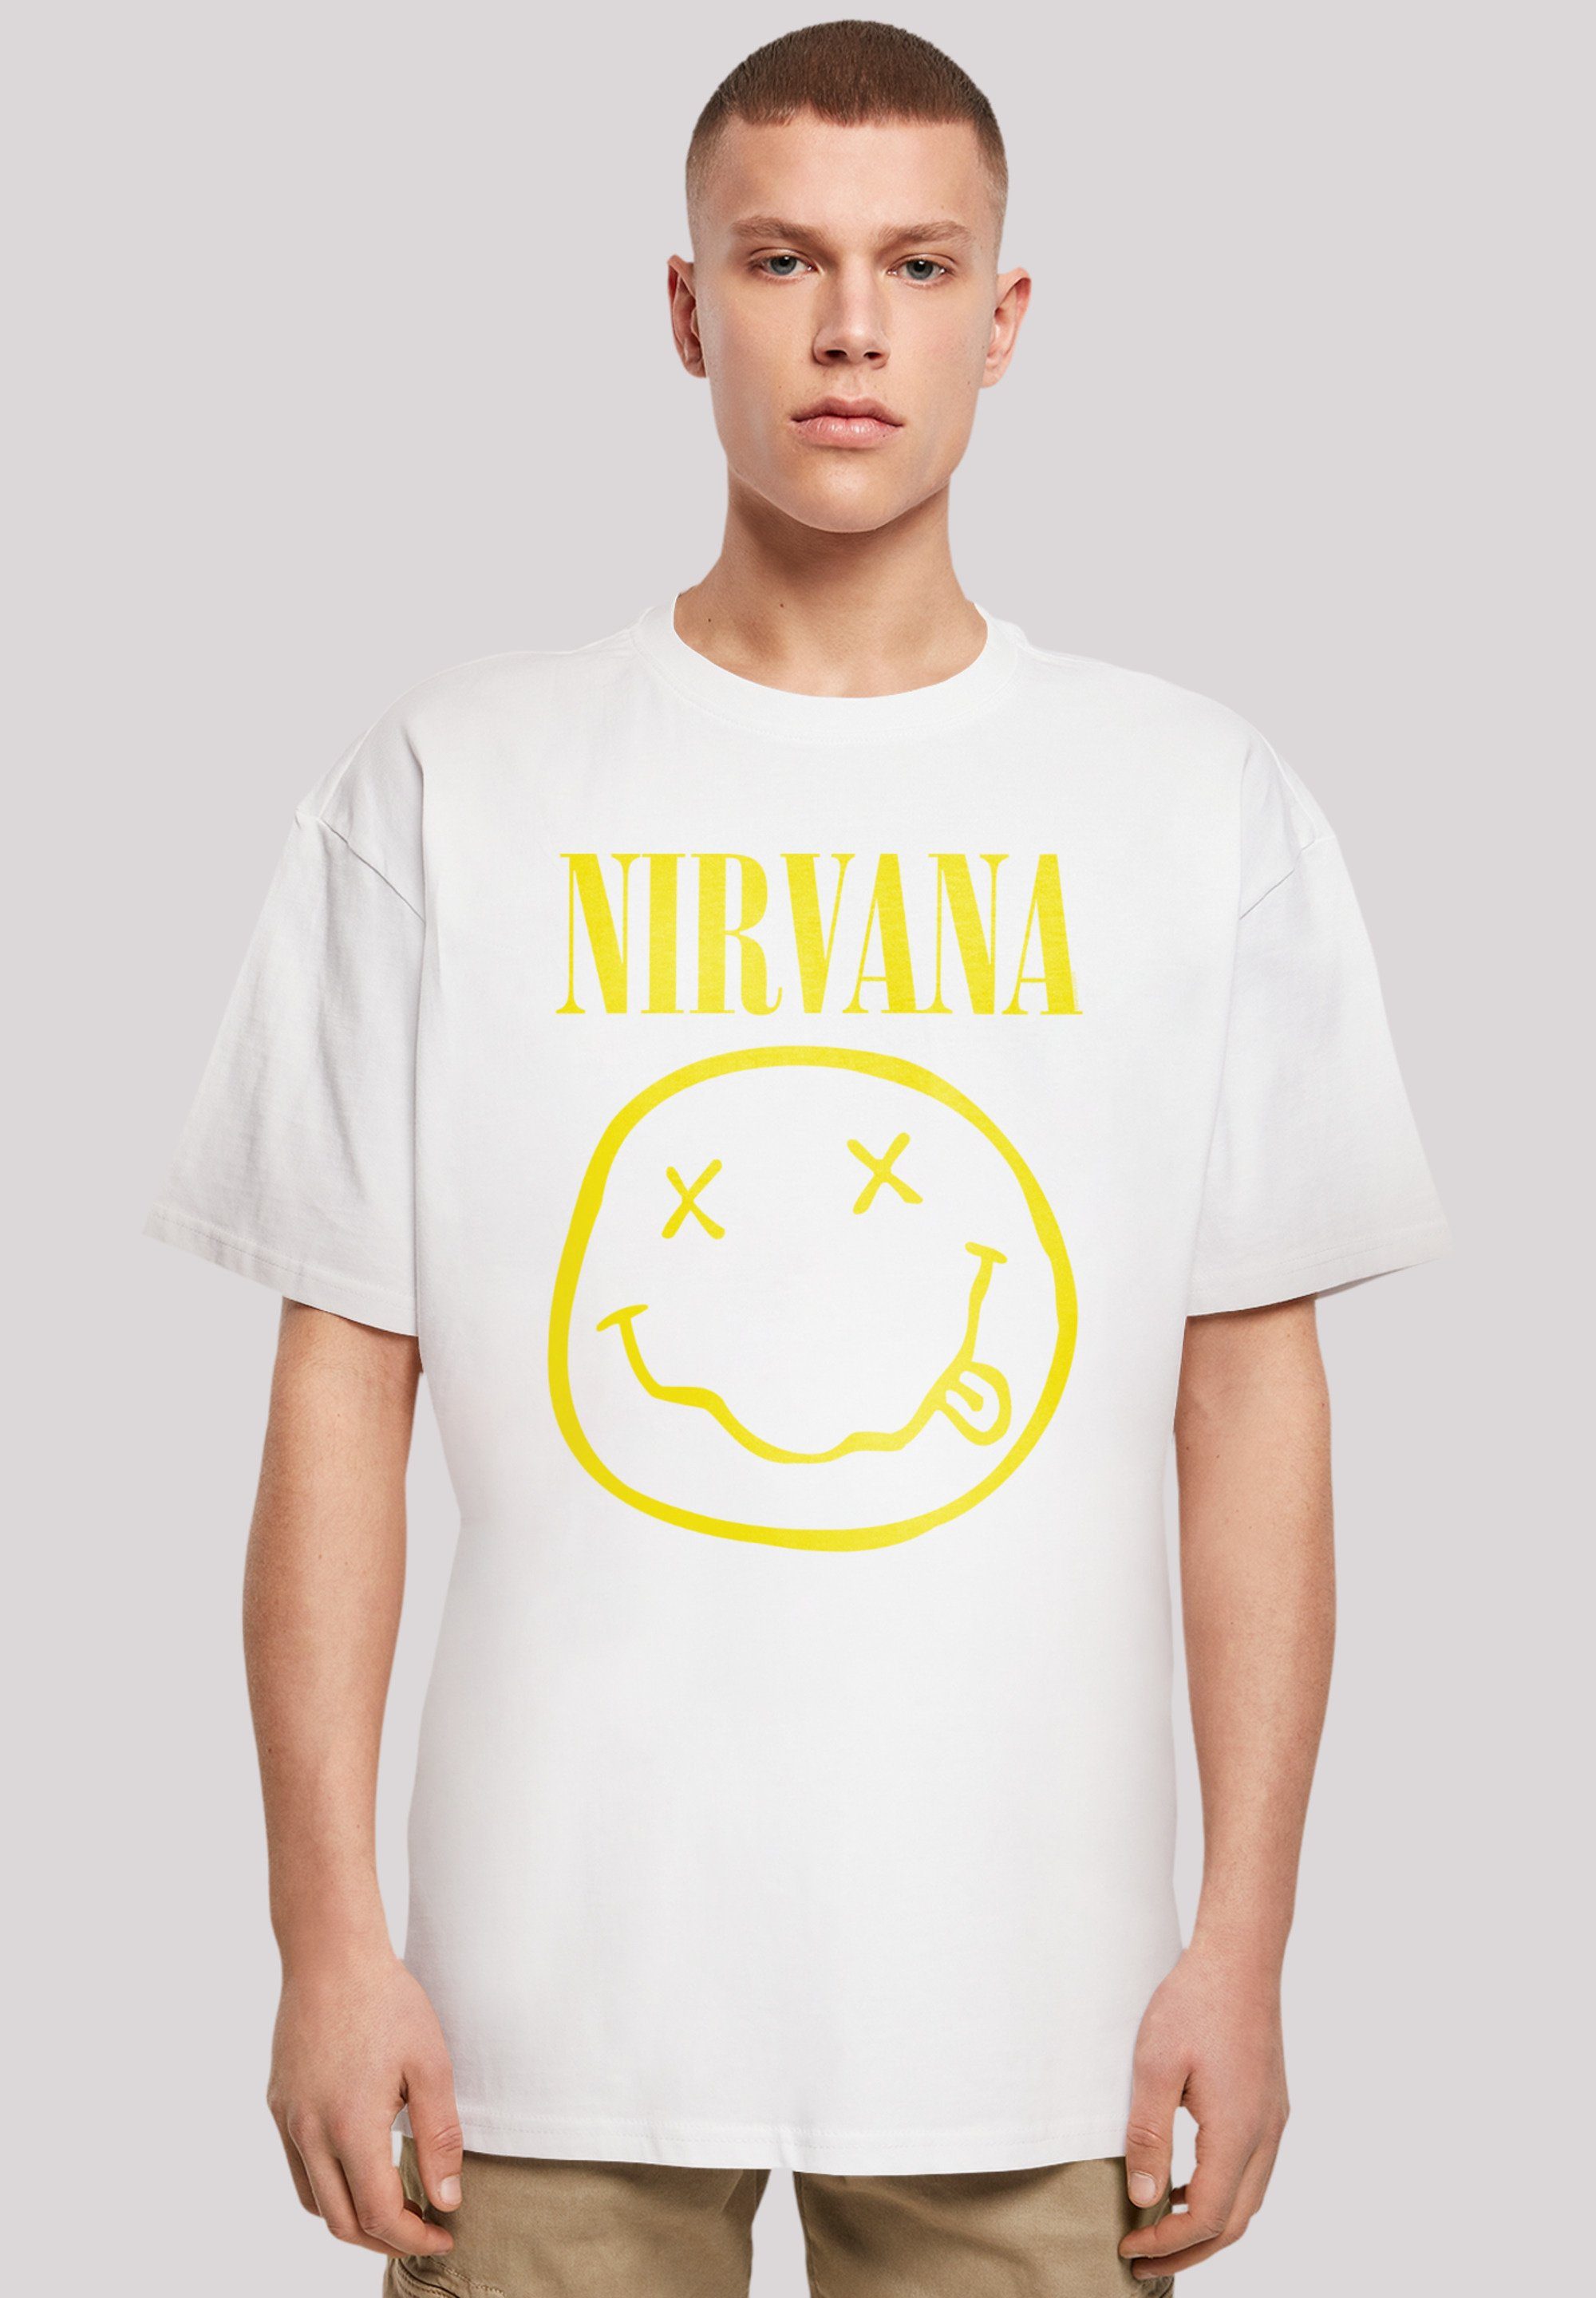 F4NT4STIC T-Shirt Nirvana Rock Band Yellow Happy Face Premium Qualität weiß